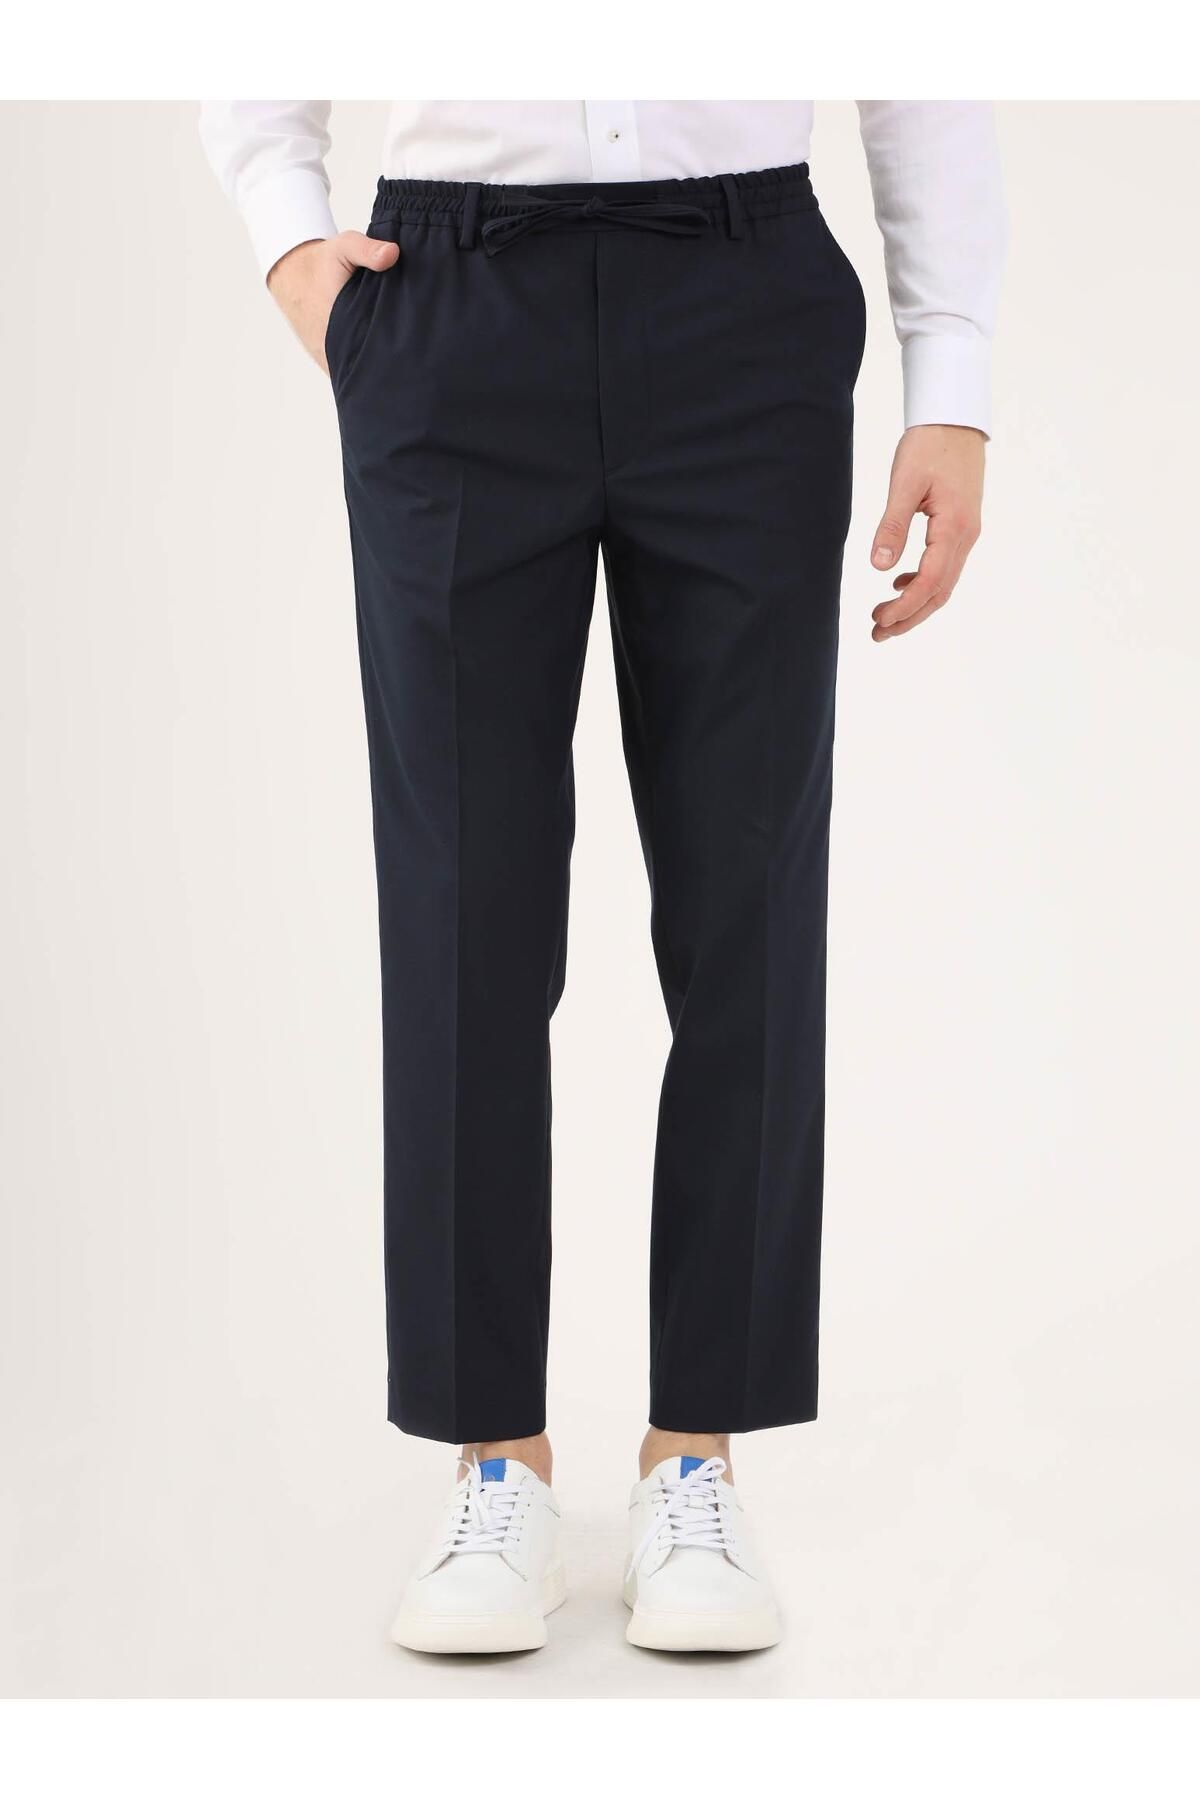 Dufy Lacivert Erkek Regular Fit Düz Klasik Pantolon - 84567